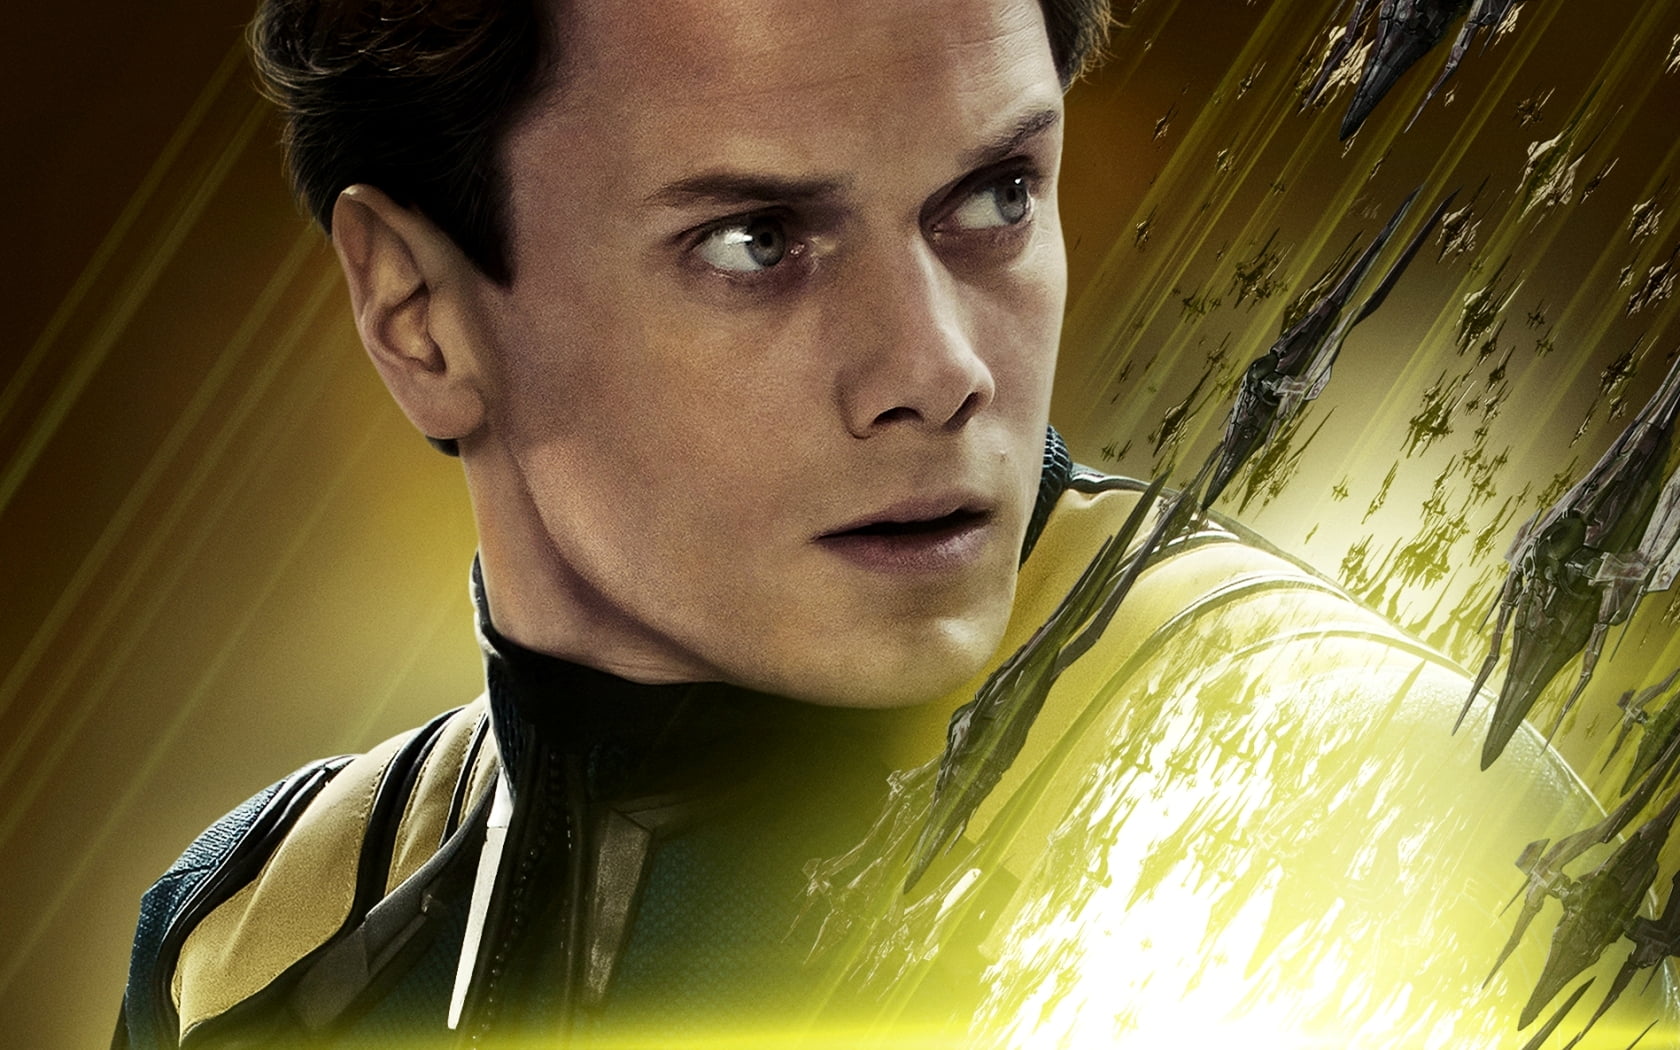 Chekov Star Trek Beyond Poster, men's black and yellow leather jacket